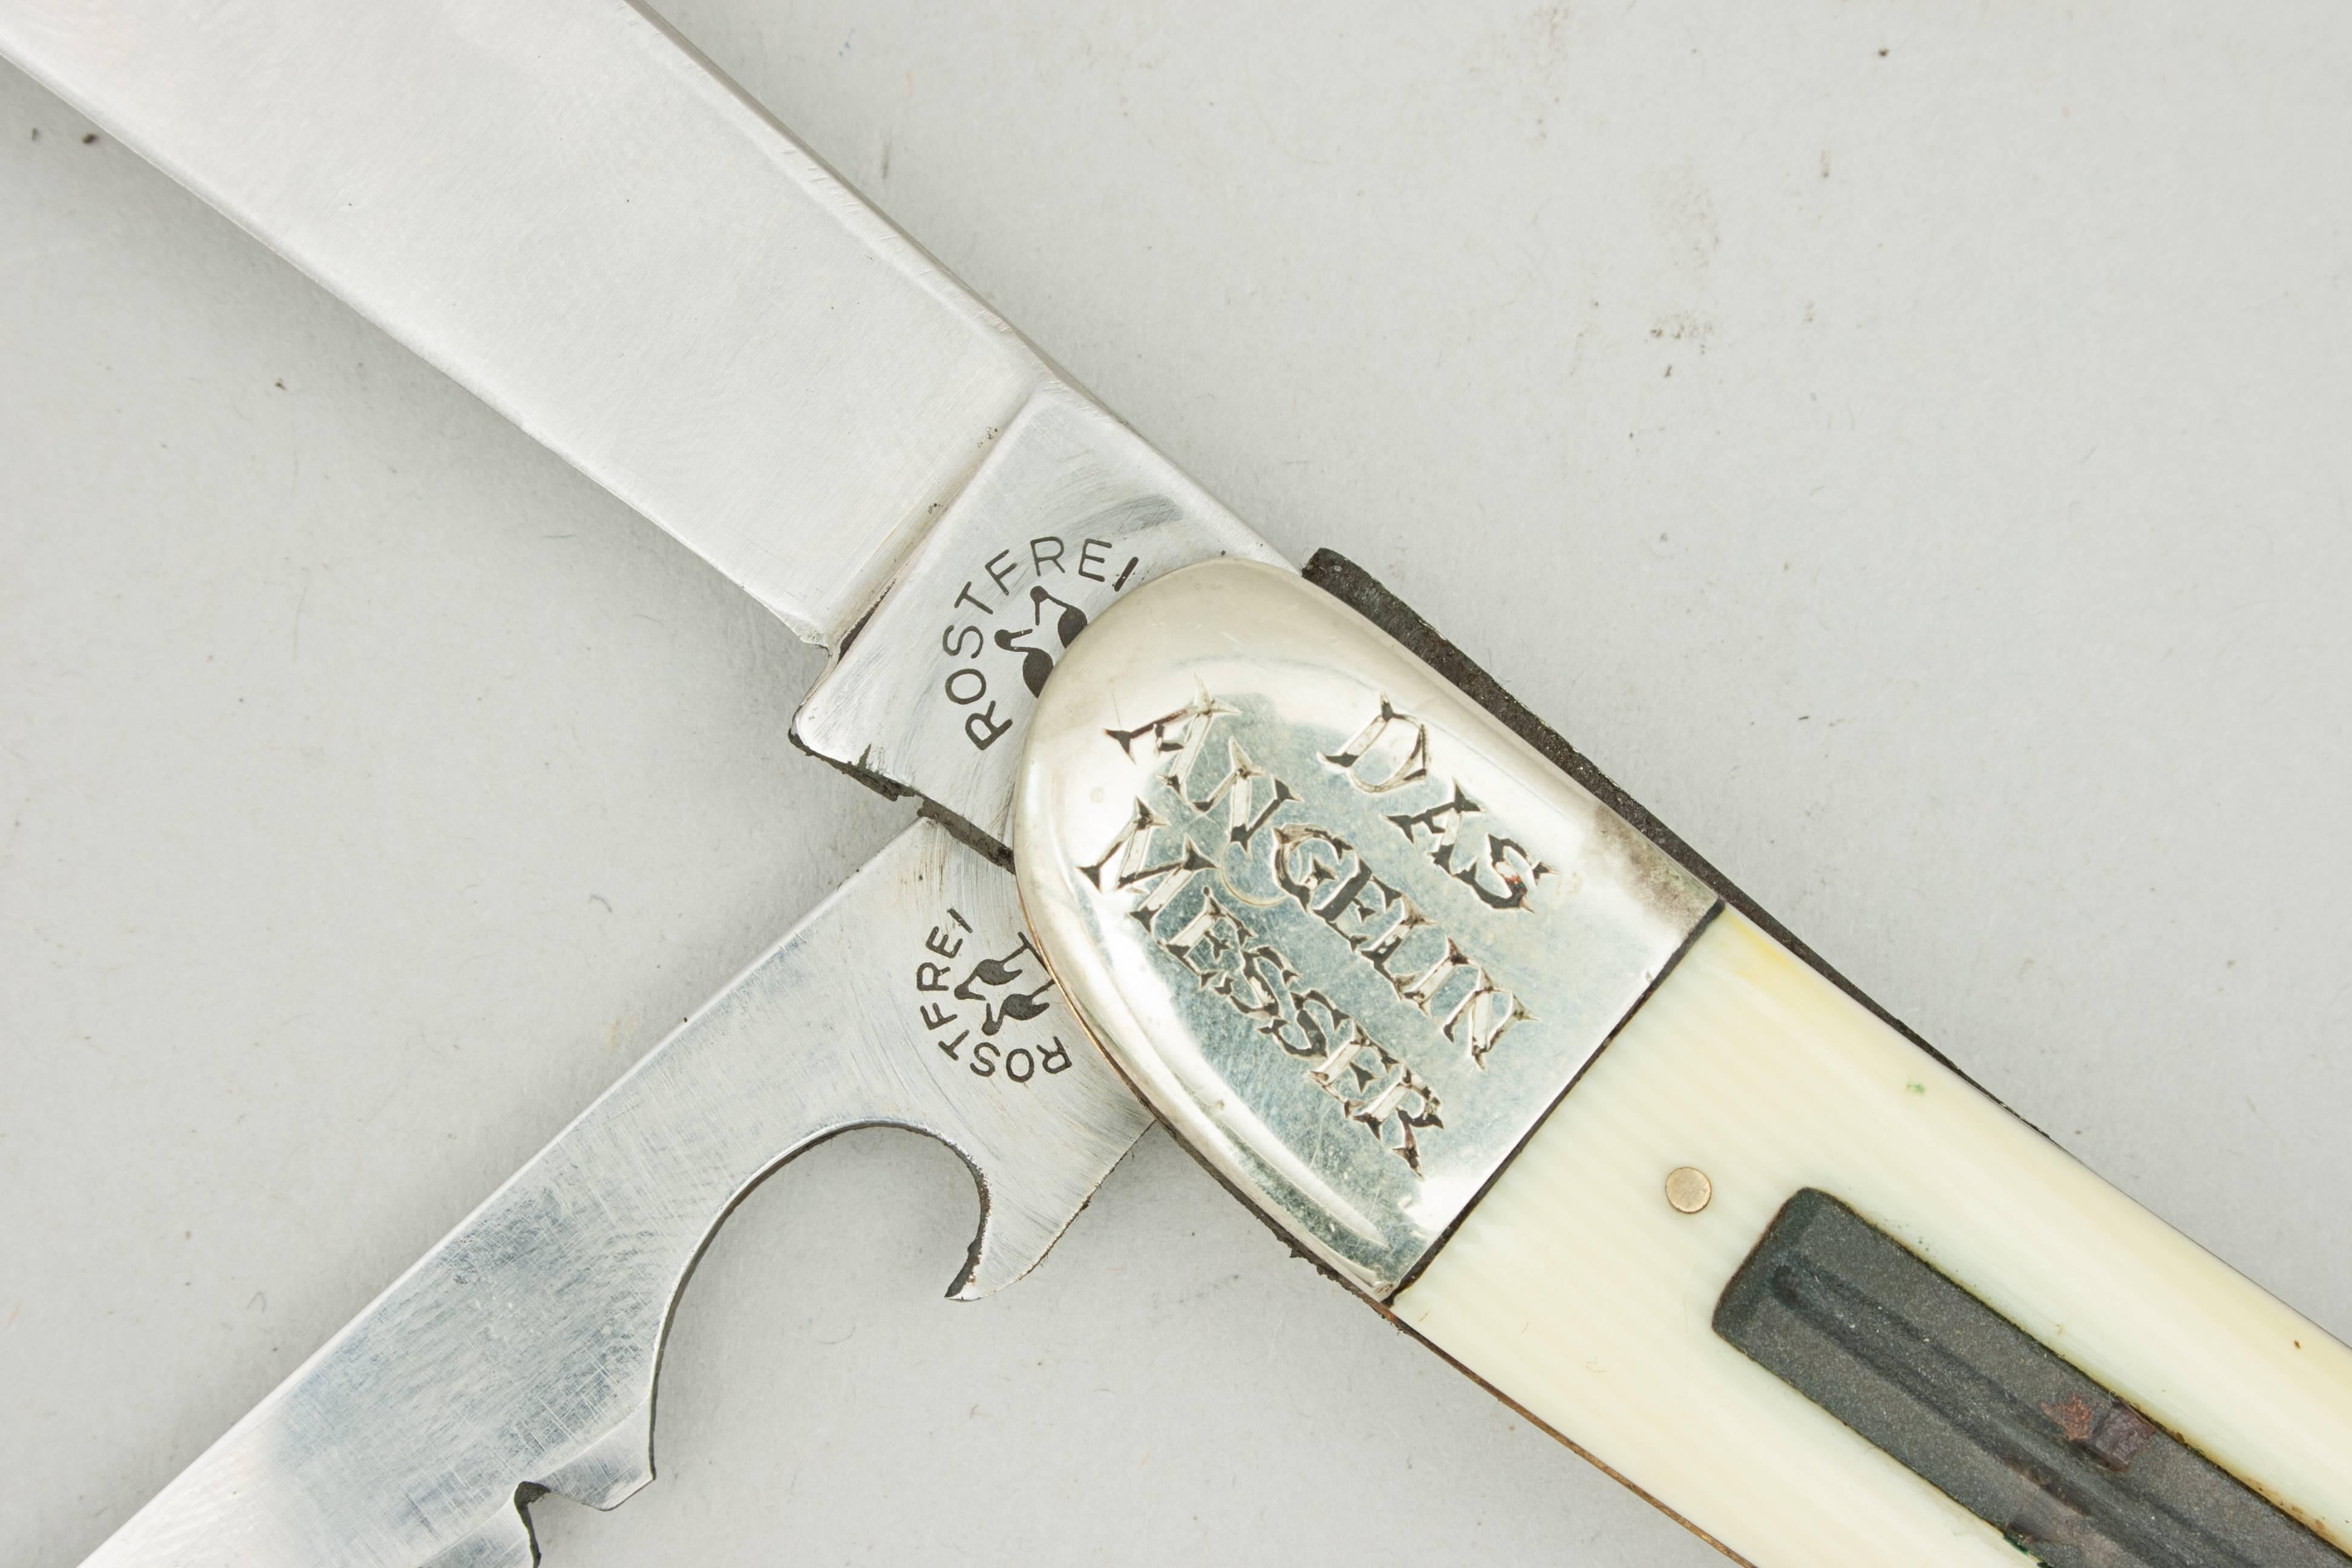 20th Century Robert Klaas Fishing Knife, Solingen